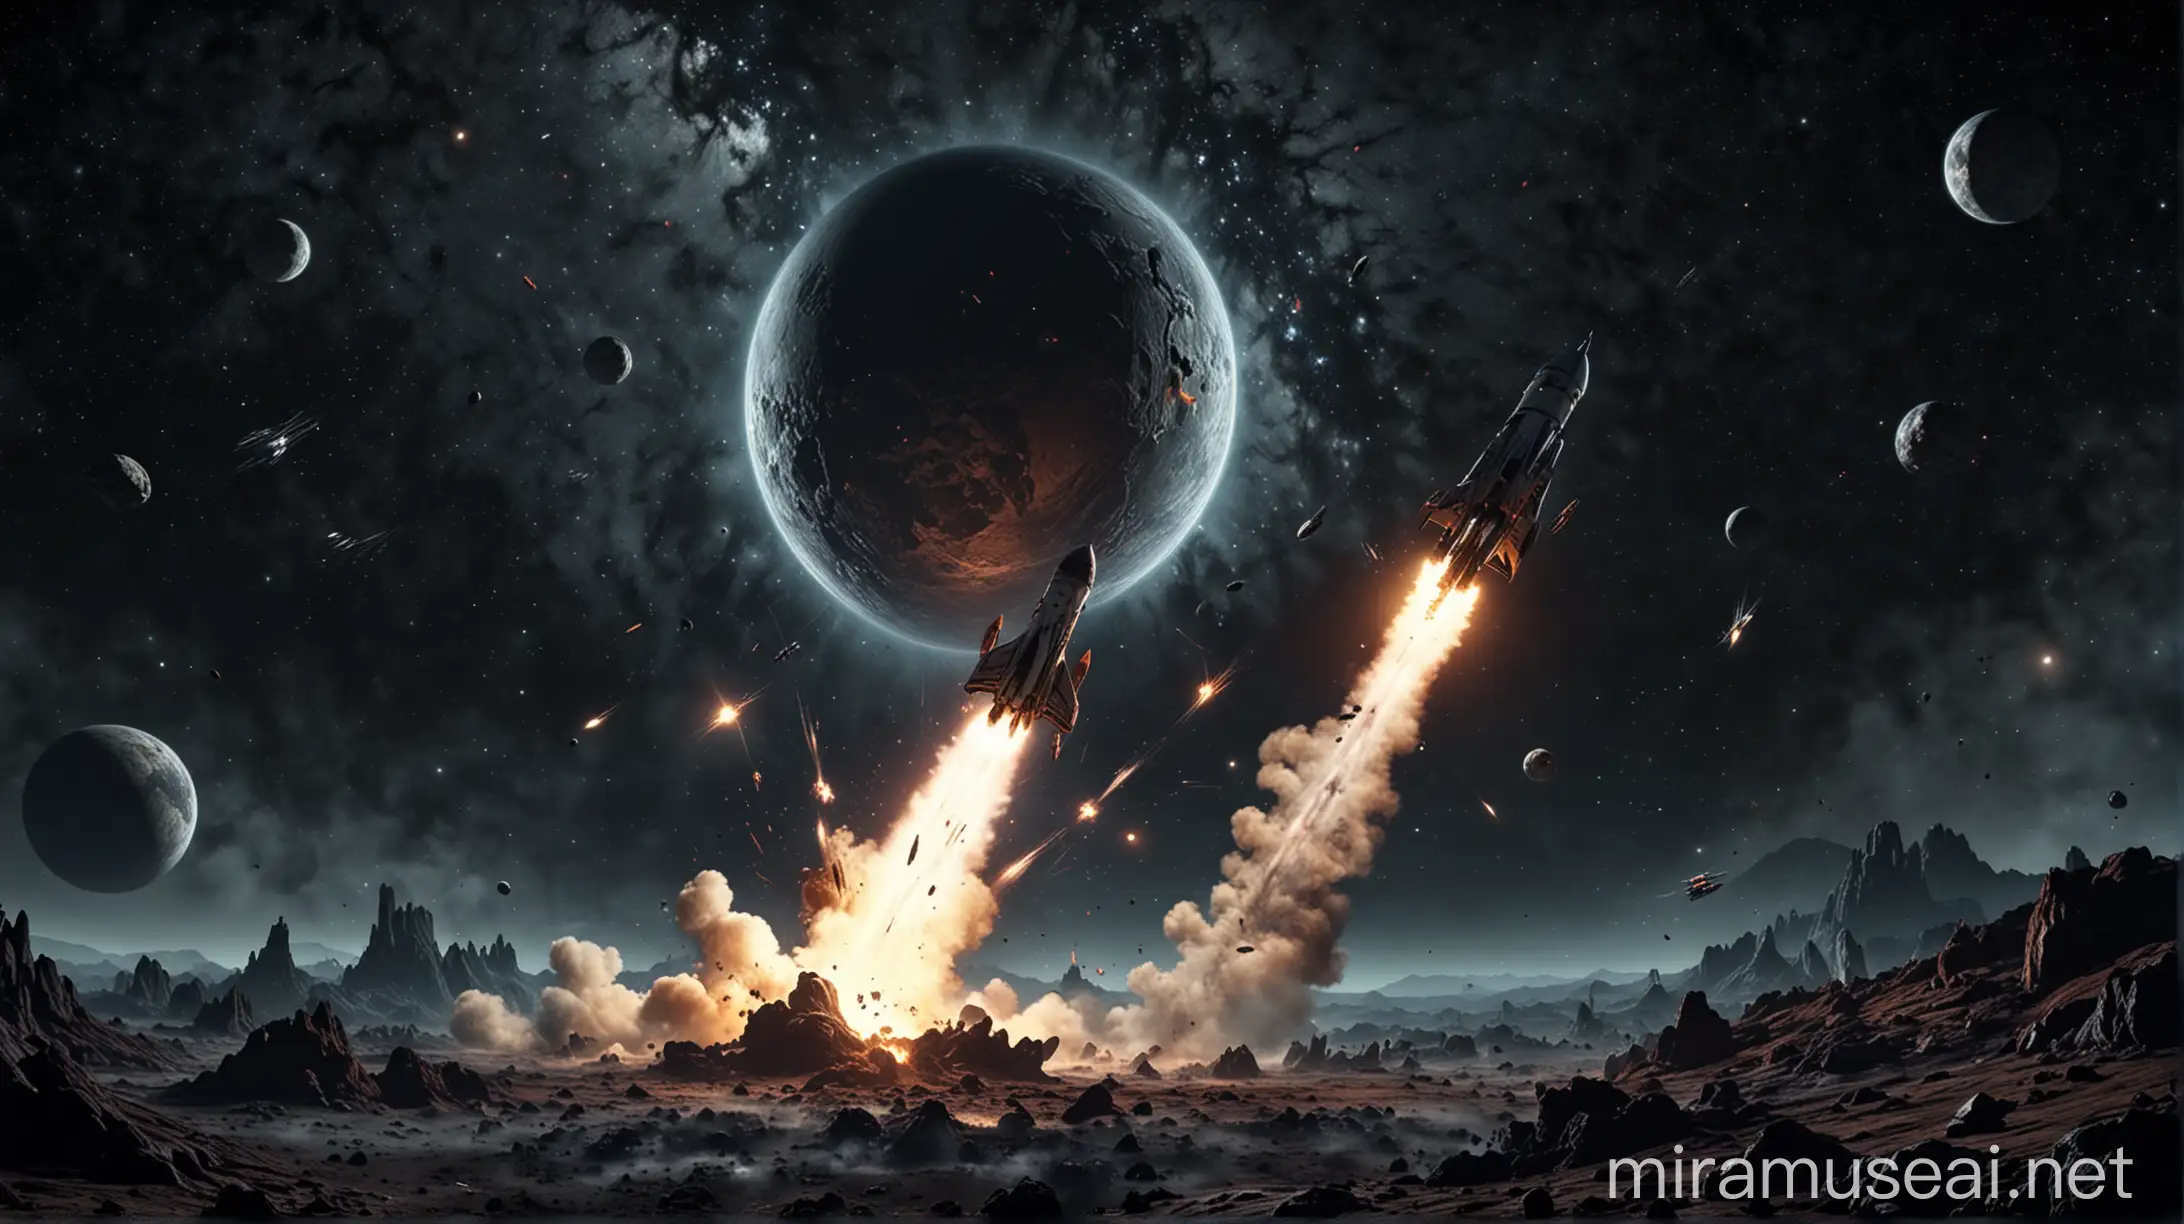 Fantasy Rockets Exploring a Desolate Planet Under a Starry Sky